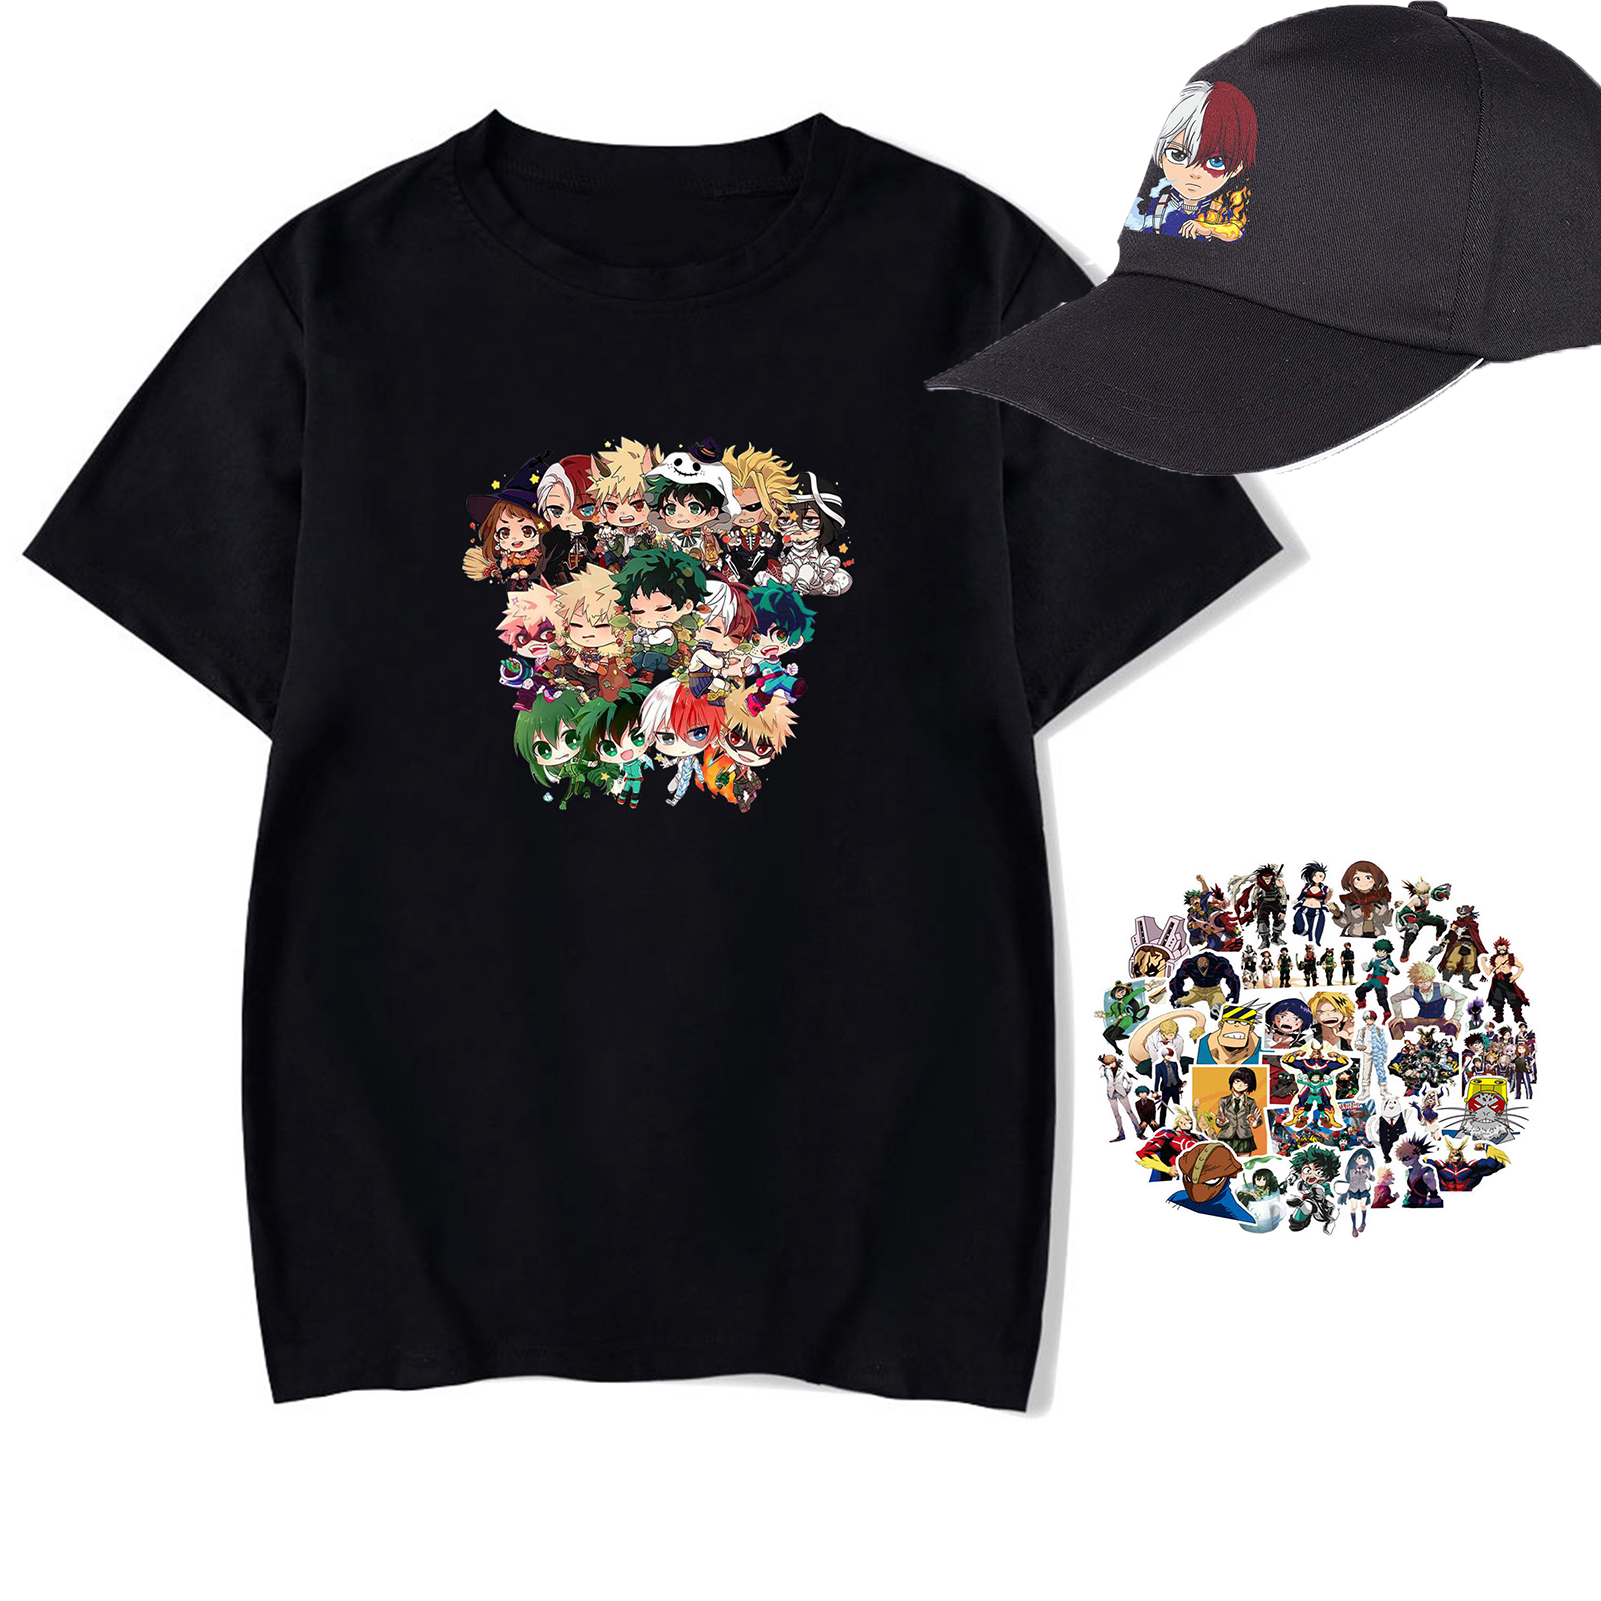 SOSPIRO Unisex My Hero Academia T Shirts Midoriya Bakugo Cosplay with Baseball Cap Sun Hat & 50pcs Anime Academia Stickers Gifts Set(Black-L) - image 1 of 7